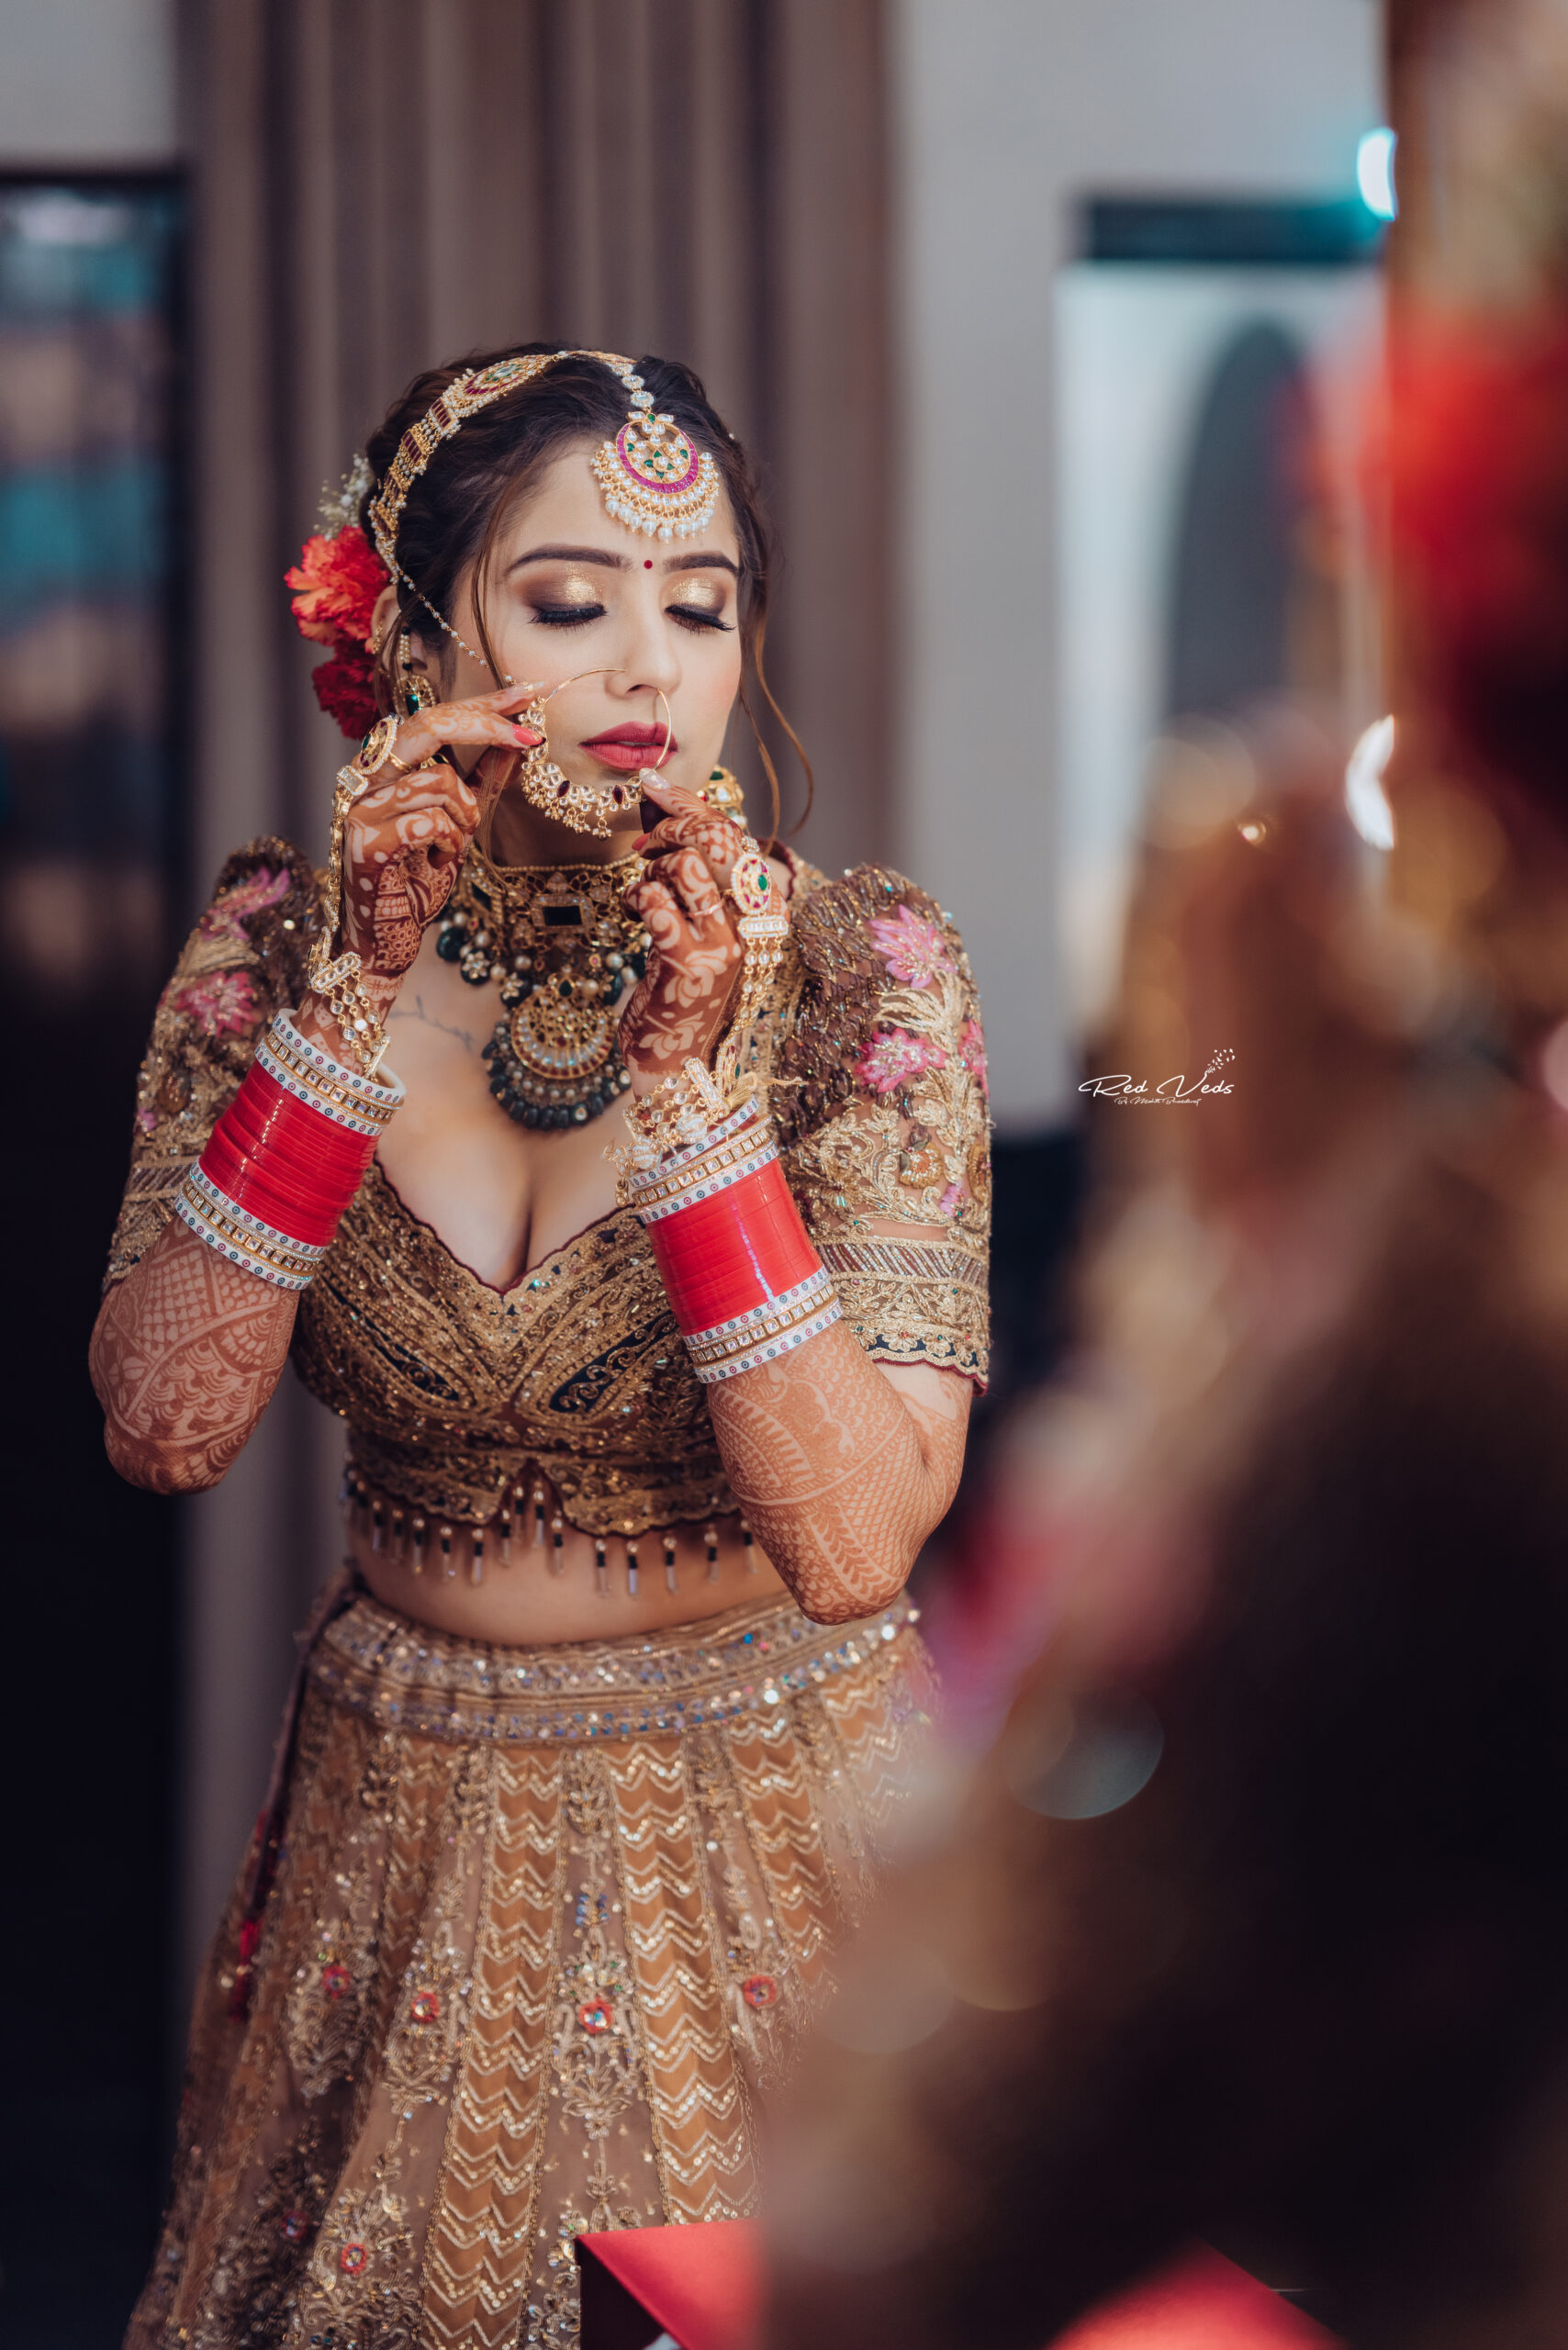 Stunning Wedding Makeup Looks for an Indian Bride - Wedium